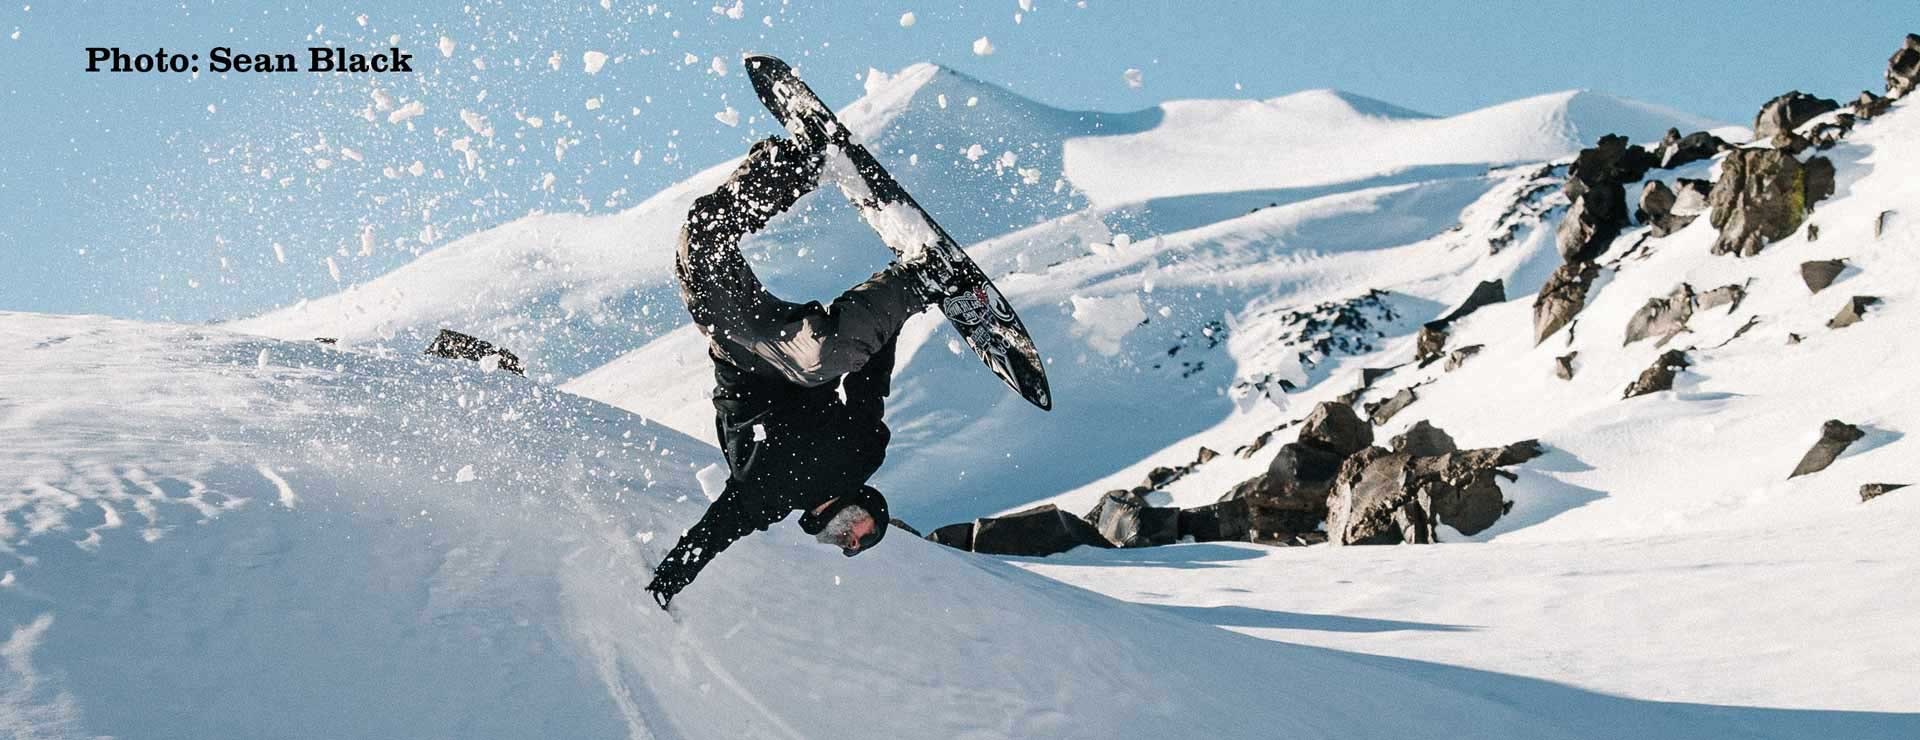 Bryan Iguchi Snowboarding